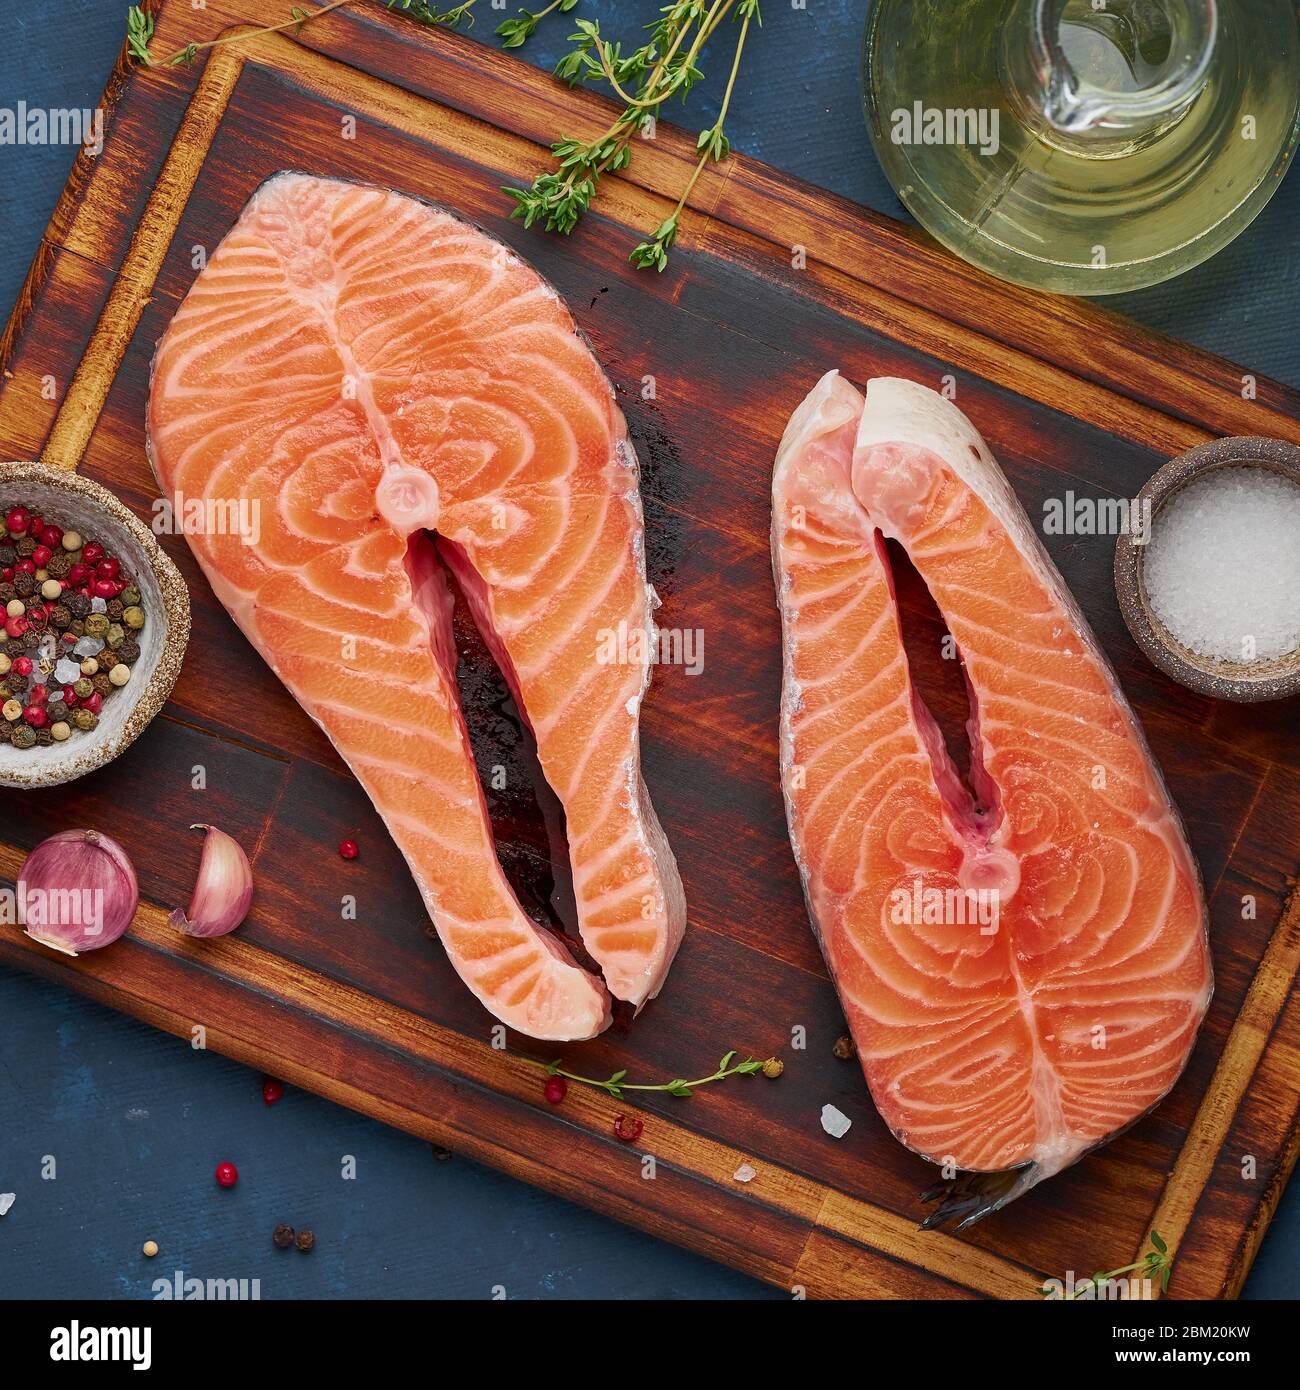 https://c8.alamy.com/comp/2BM20KW/two-salmon-steaks-fish-fillet-large-sliced-portions-on-chopping-board-2BM20KW.jpg